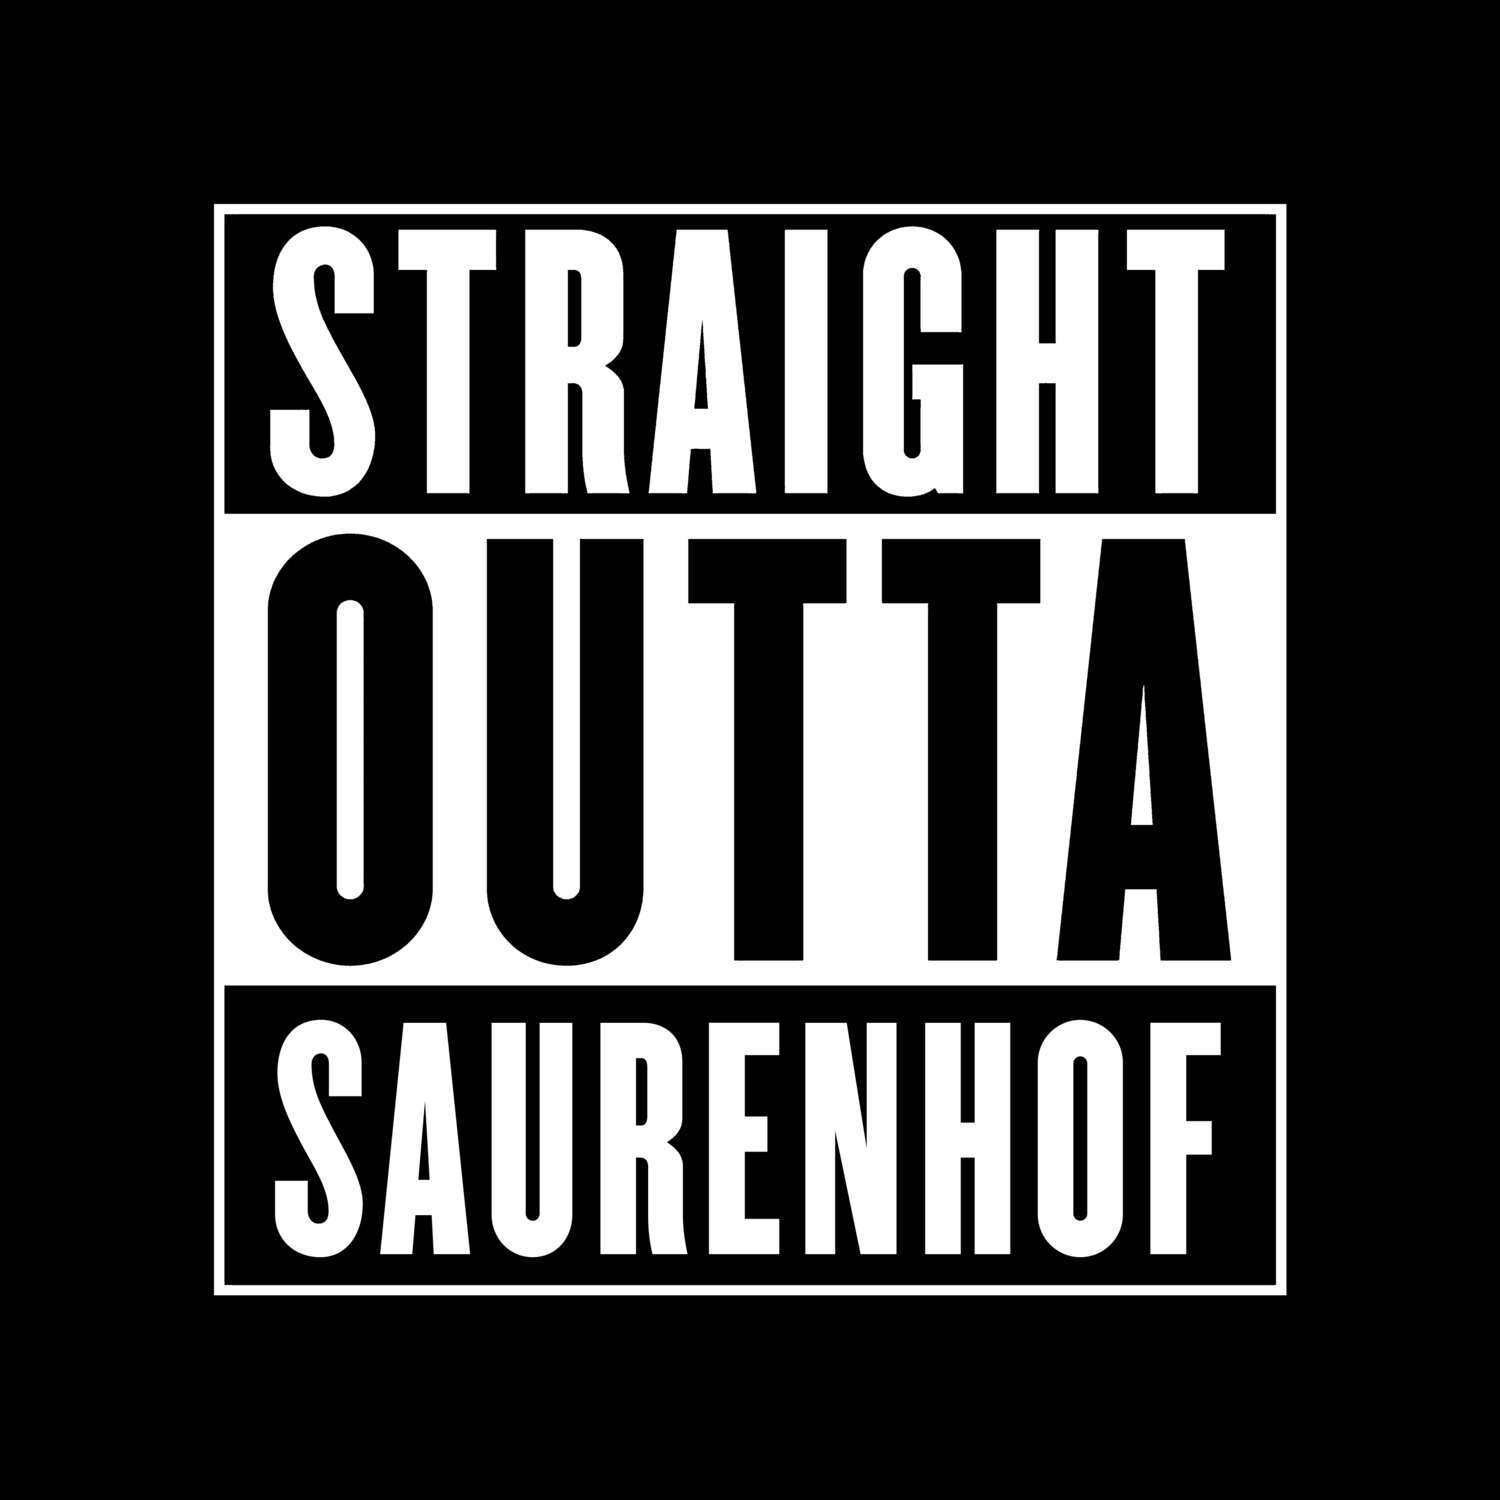 Saurenhof T-Shirt »Straight Outta«